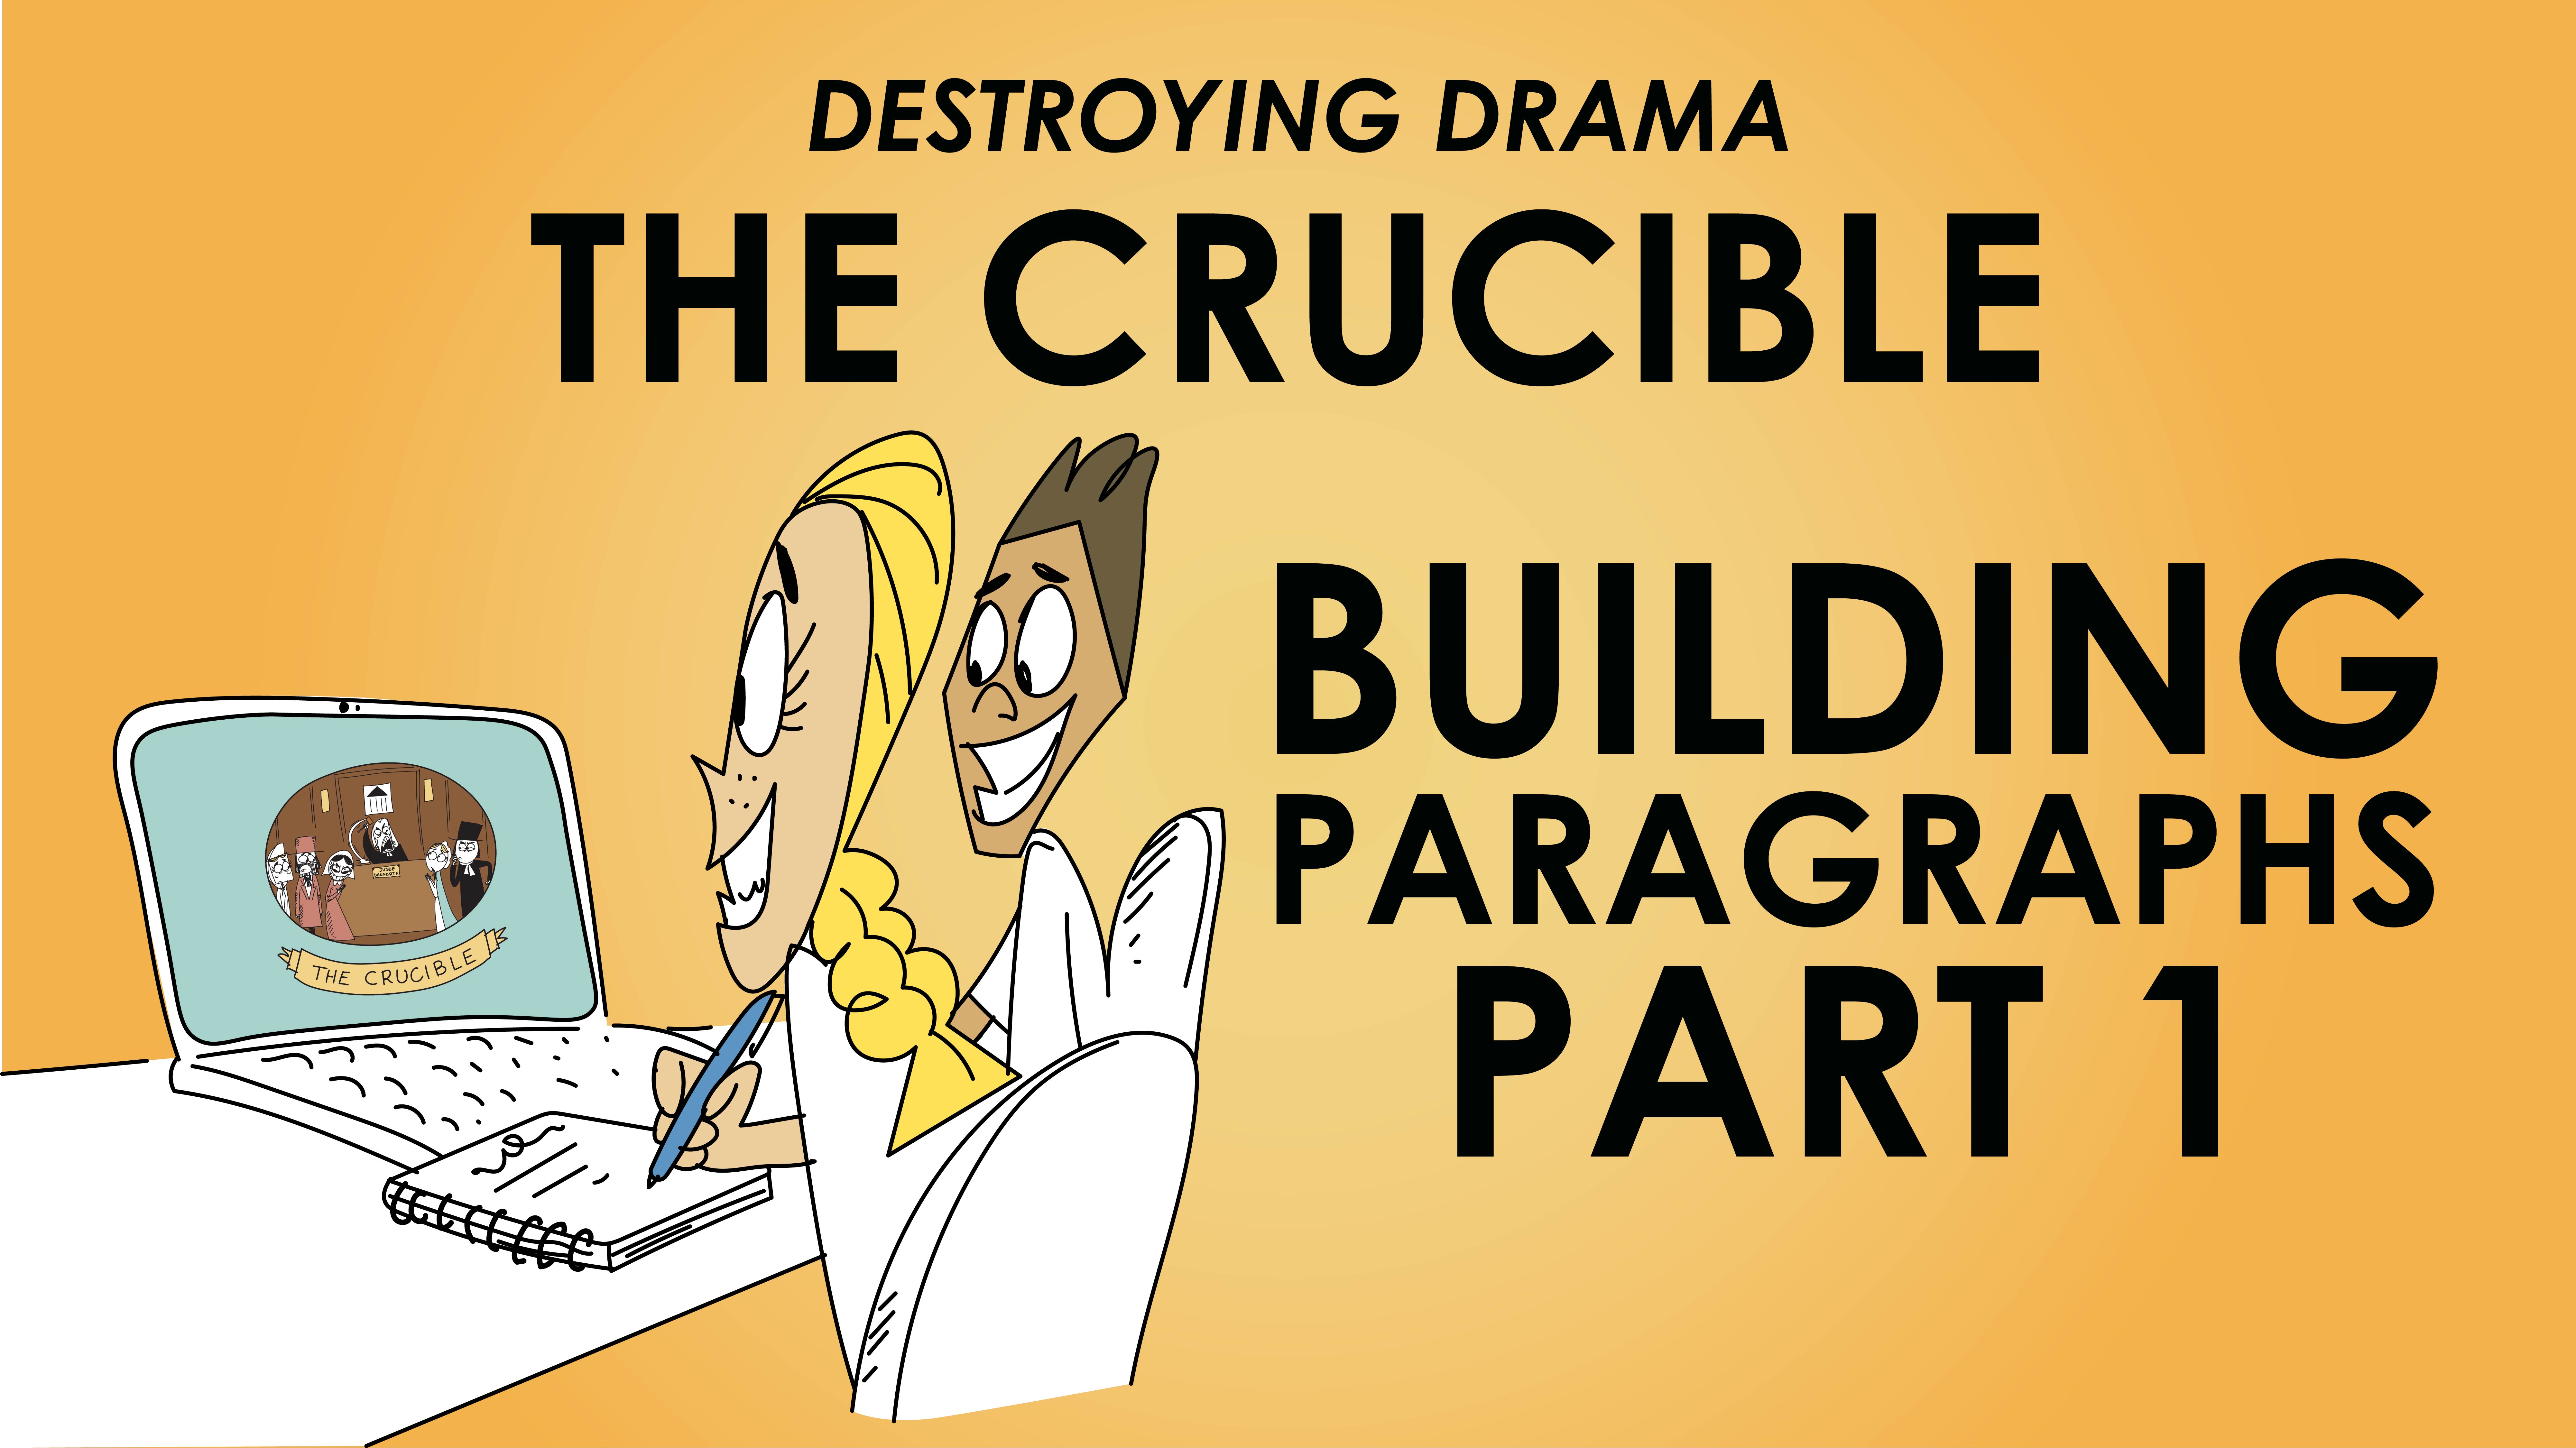 The Crucible - Arthur Miller - Building Paragraphs 1 - Destroying Drama Series